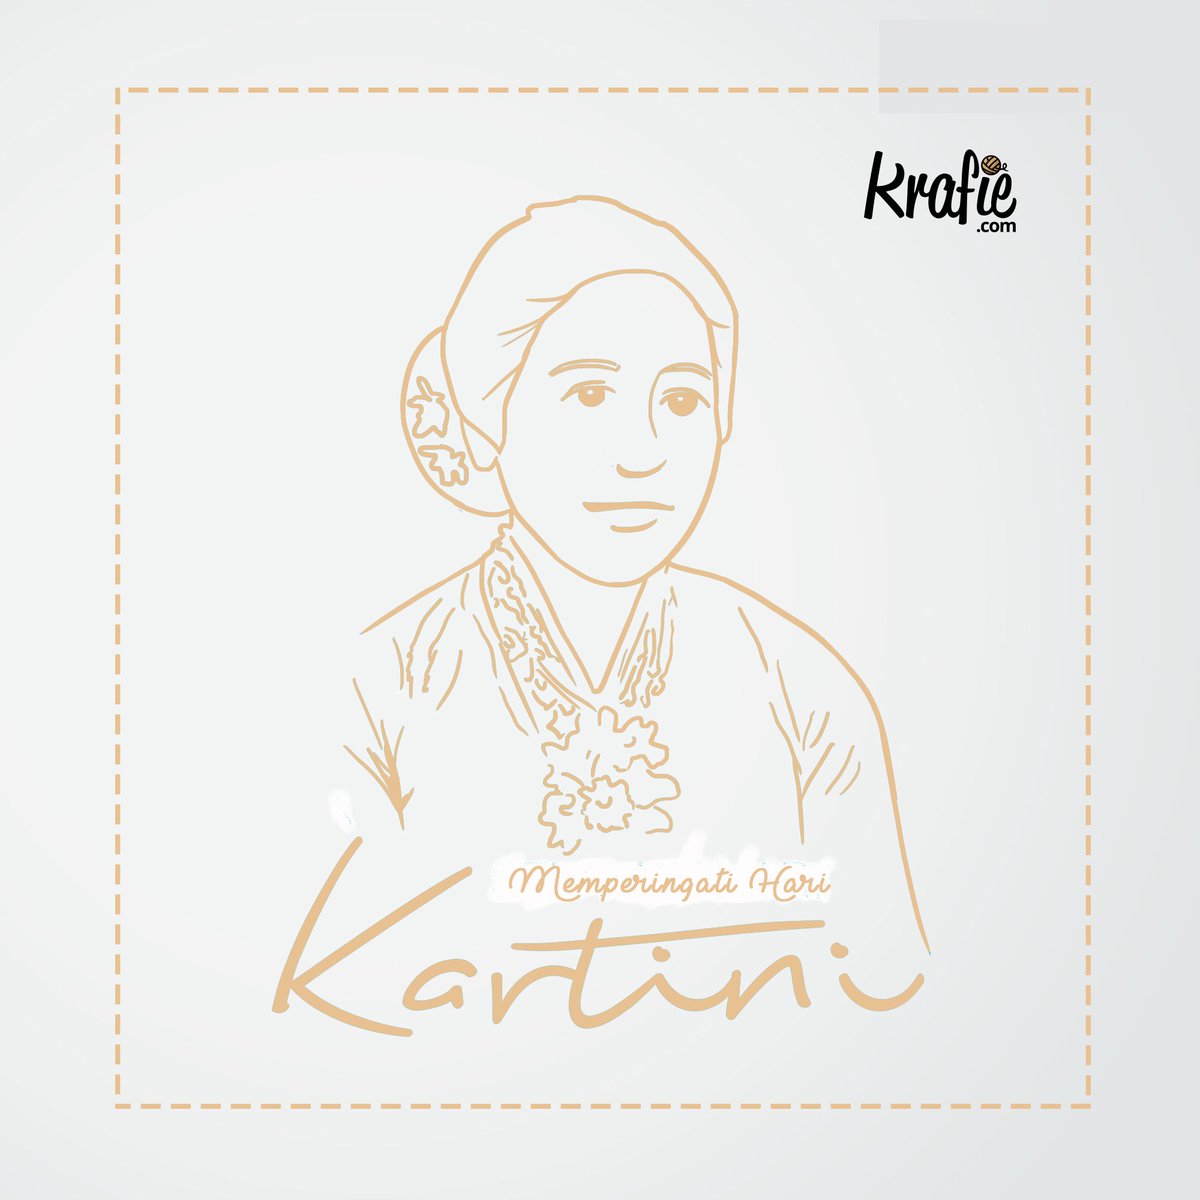 Selamat memperingati Hari Kartini !!

Mari teruskan semangat Raden Ajeng Kartini di masa kini denga berbakti kepada keluarga, dan bermanfaat bagi sesama serta nusa bangsa 😊

#harikartini #kartini'sday #harikartini2018 #kartini2018 #emansipasiwanita #kartinimasakini